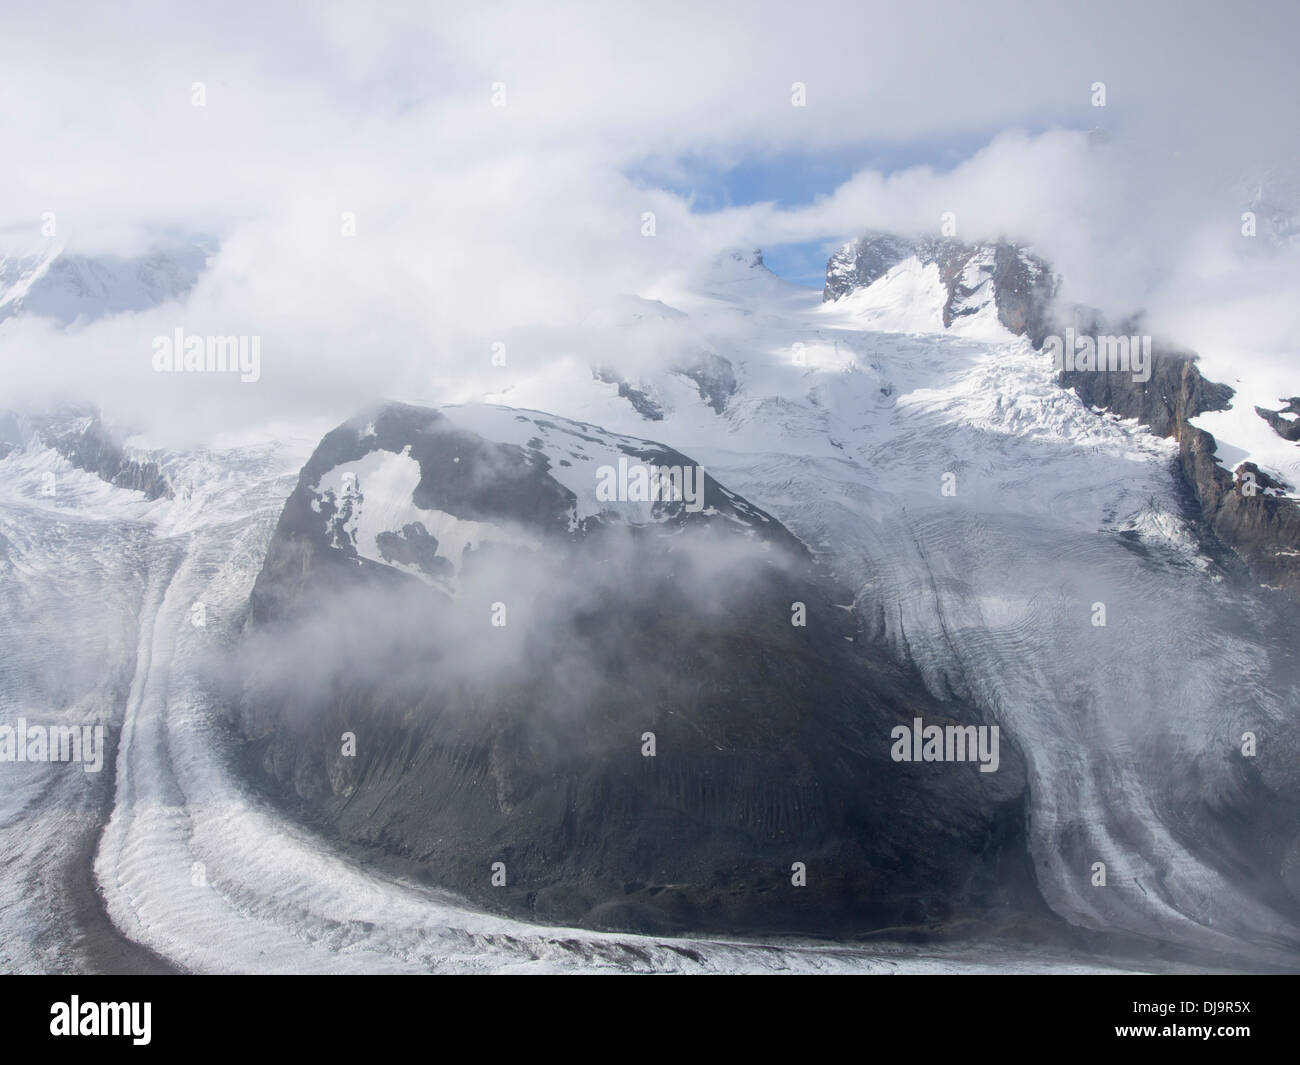 Alpine glaciazioni, Gorner ghiacciaio Gornergletscher, nei pressi di Zermatt in Svizzera, mediale morene sulla superficie ghiacciata Foto Stock